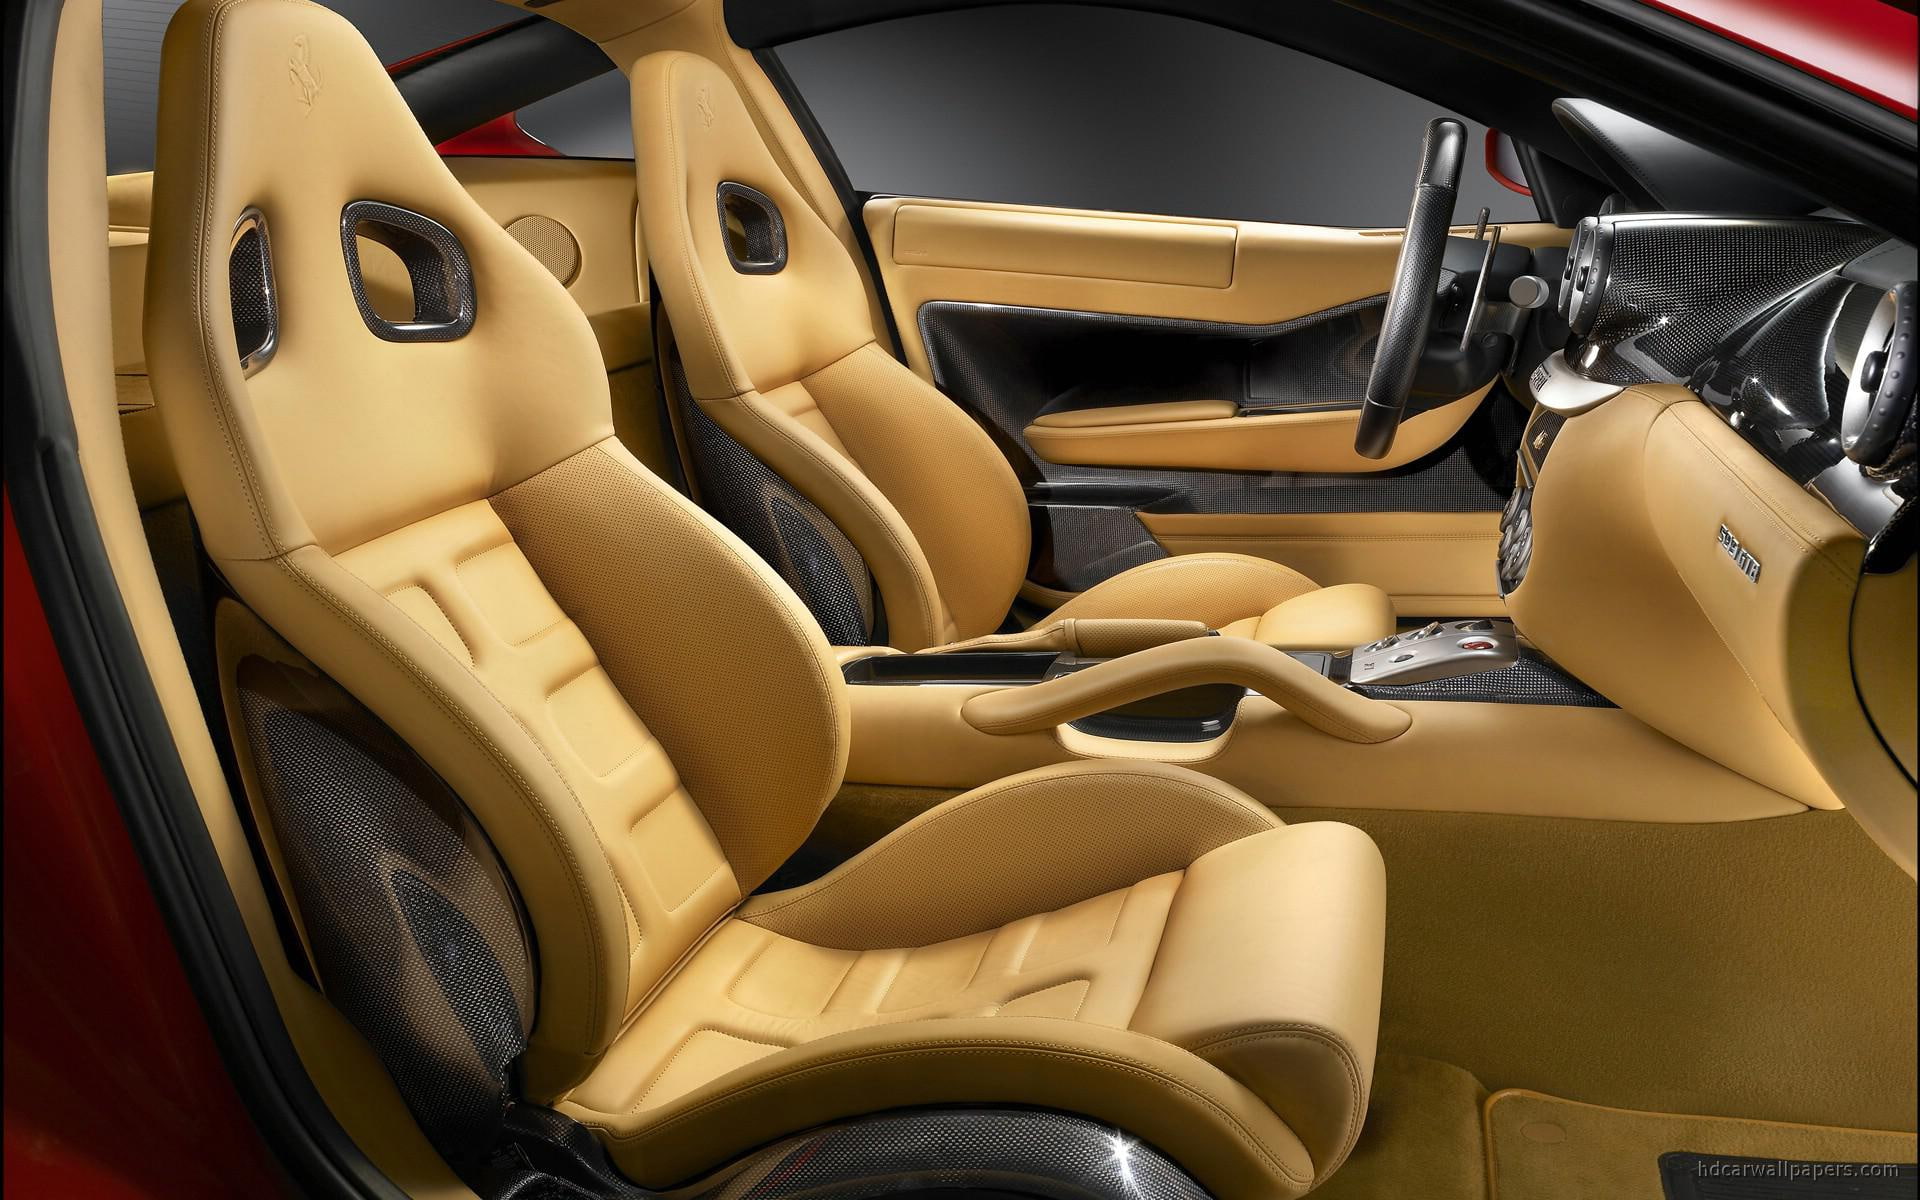 Ferrari 599 GTB Interior 2, beige leather car bucket seat, cars